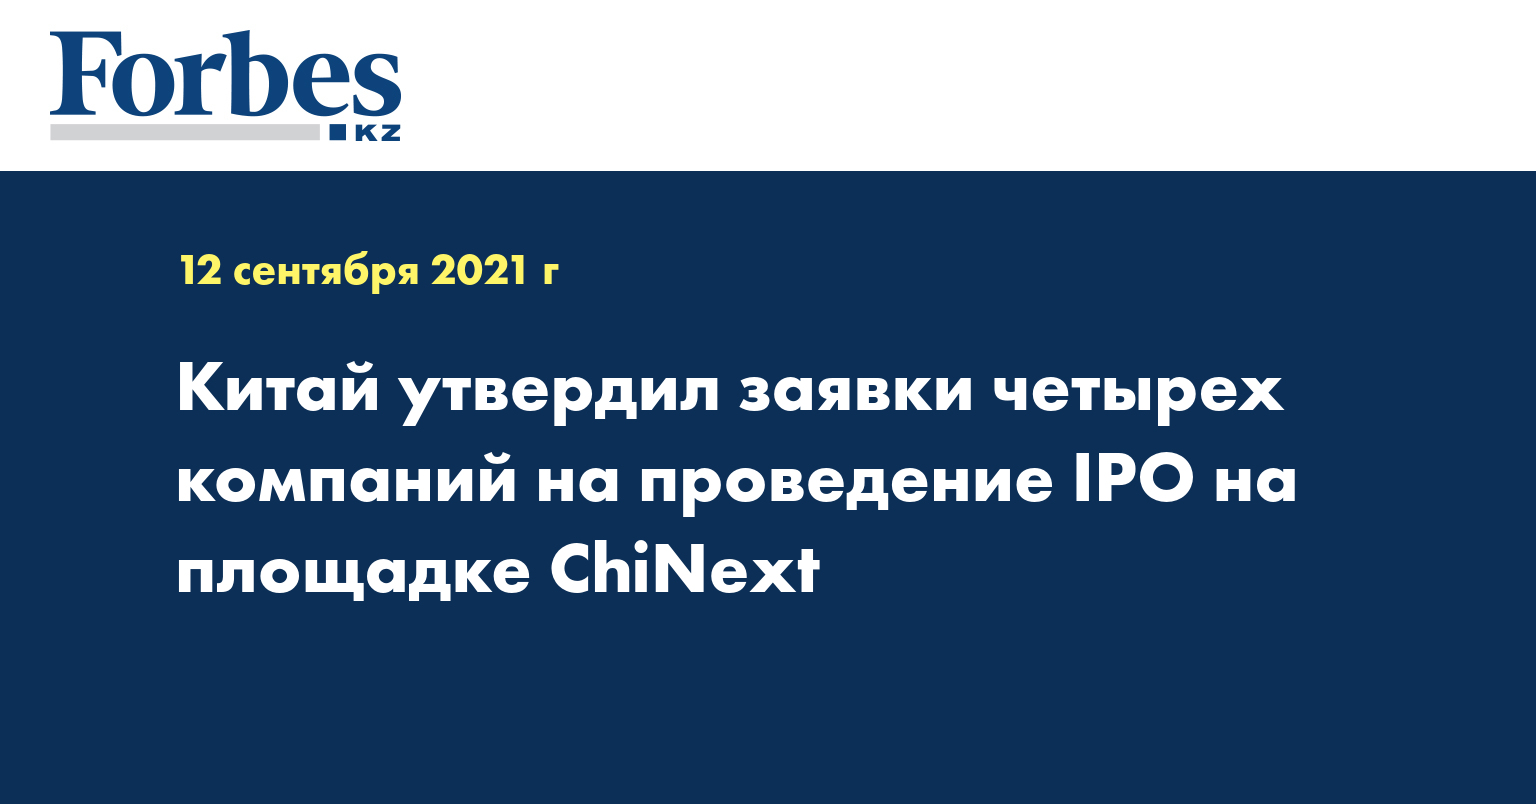 Китай утвердил заявки четырех компаний на проведение IPO на площадке ChiNext